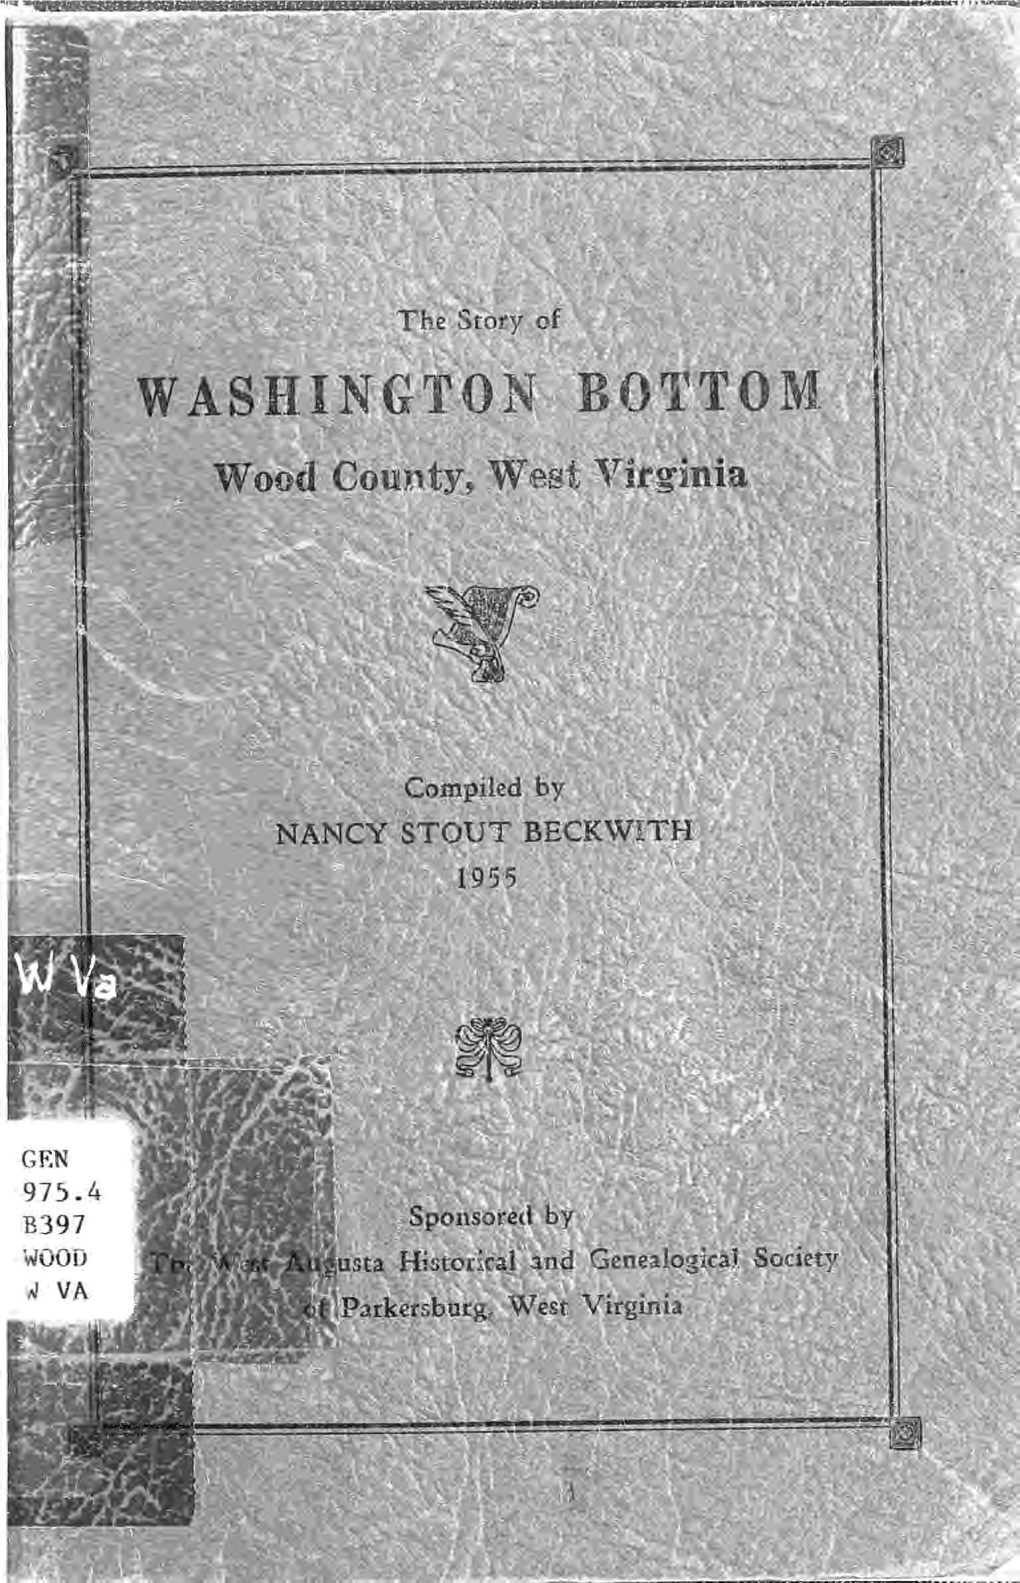 The Story of Washington Bottom, Wood County, West Virginia